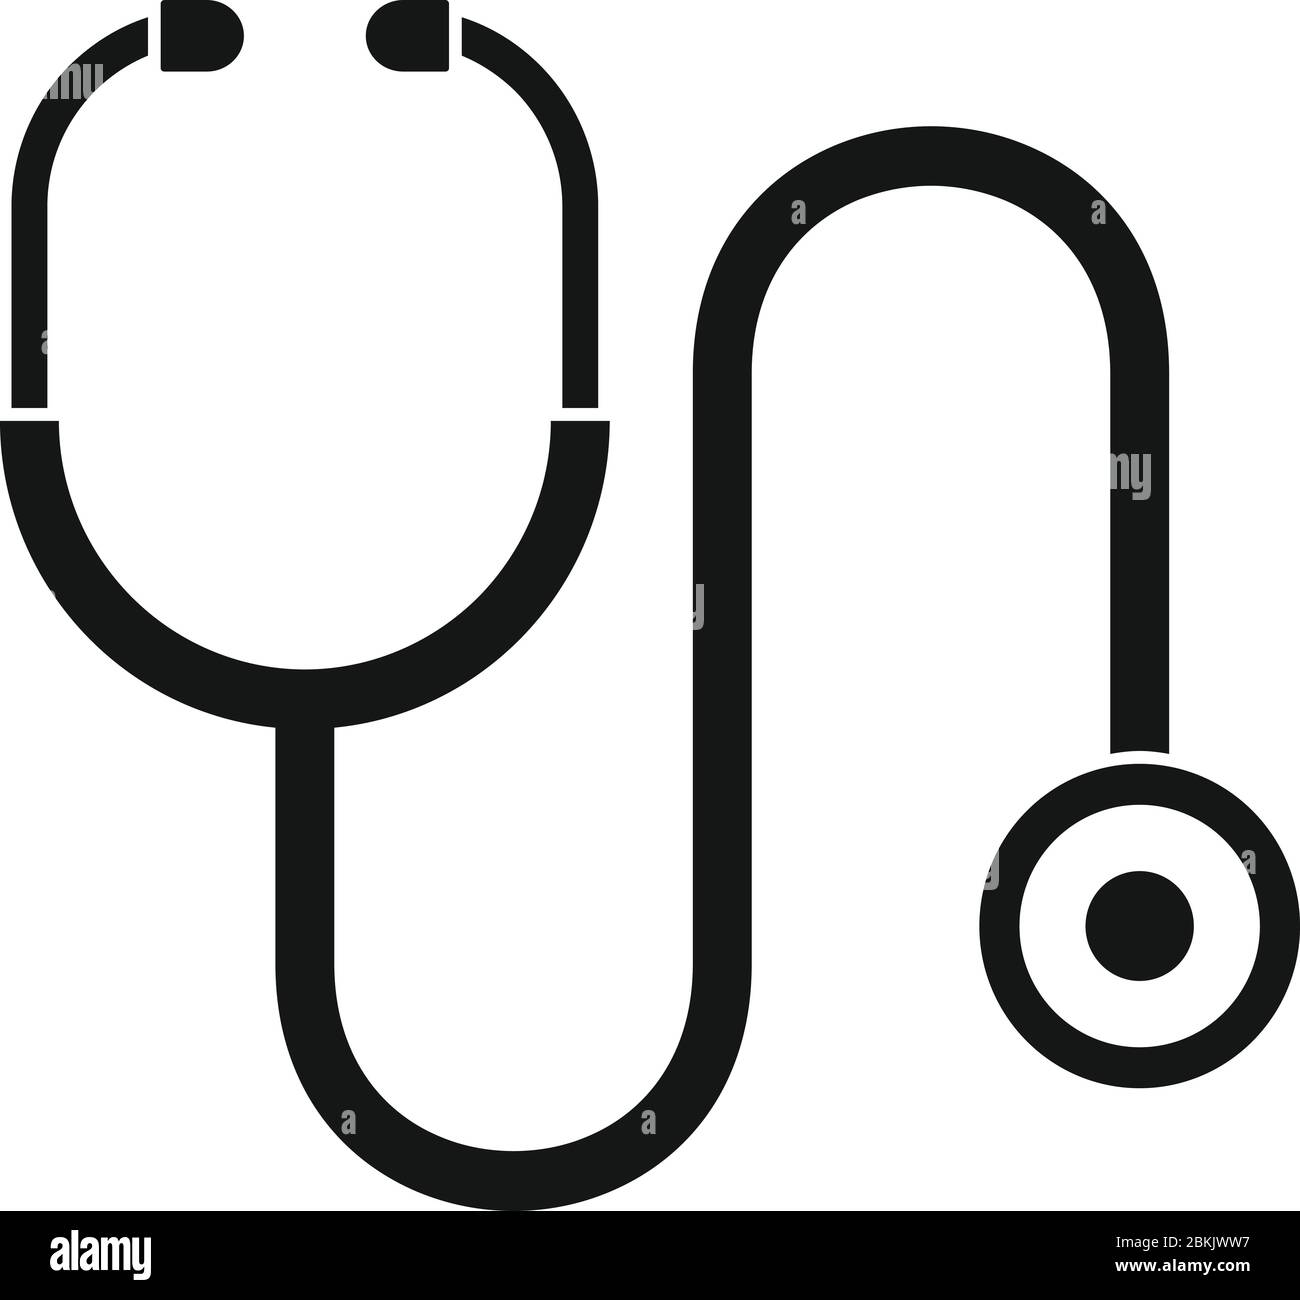 https://c8.alamy.com/comp/2BKJWW7/medical-stethoscope-icon-simple-illustration-of-medical-stethoscope-vector-icon-for-web-design-isolated-on-white-background-2BKJWW7.jpg